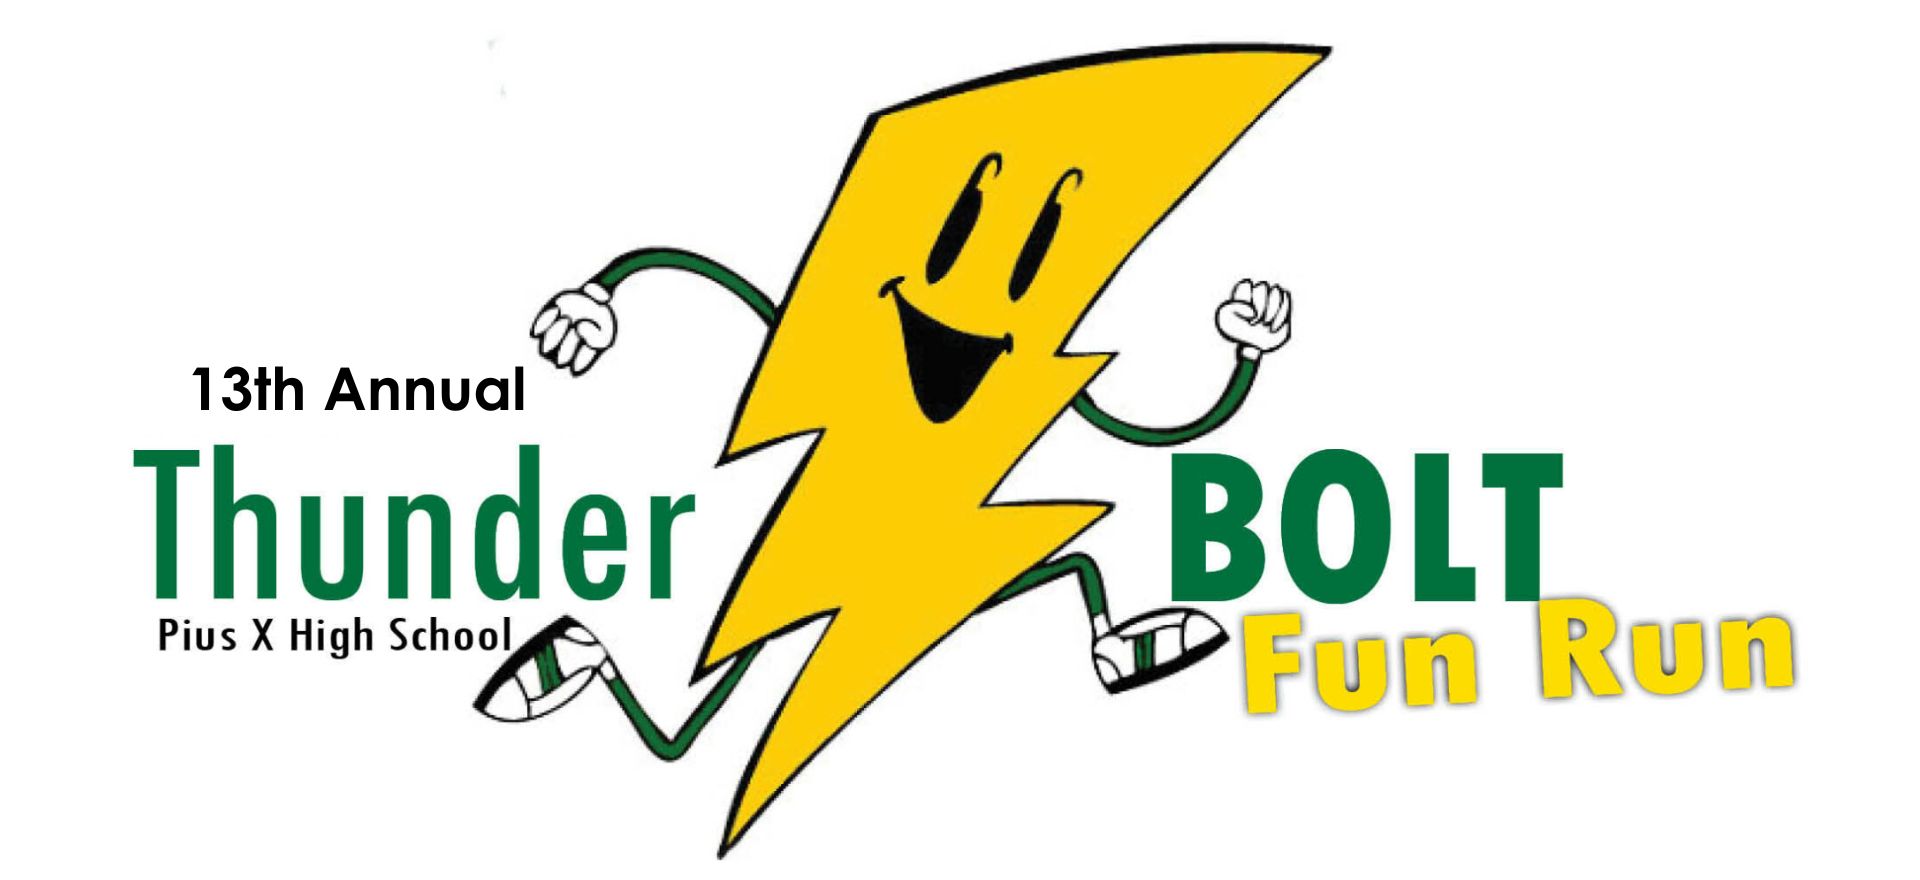 ThunderBOLT Fun Run logo 1000